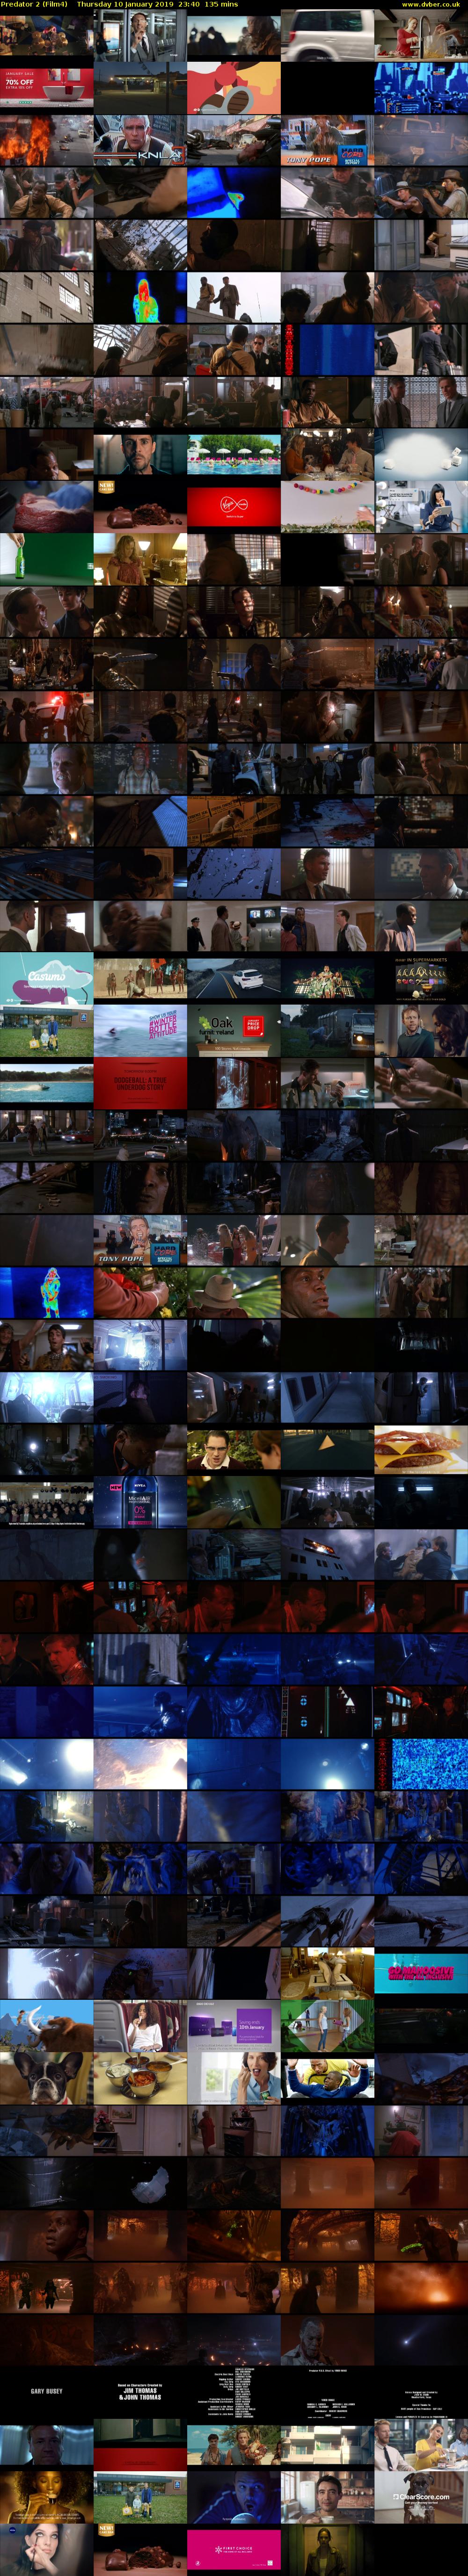 Predator 2 (Film4) Thursday 10 January 2019 23:40 - 01:55